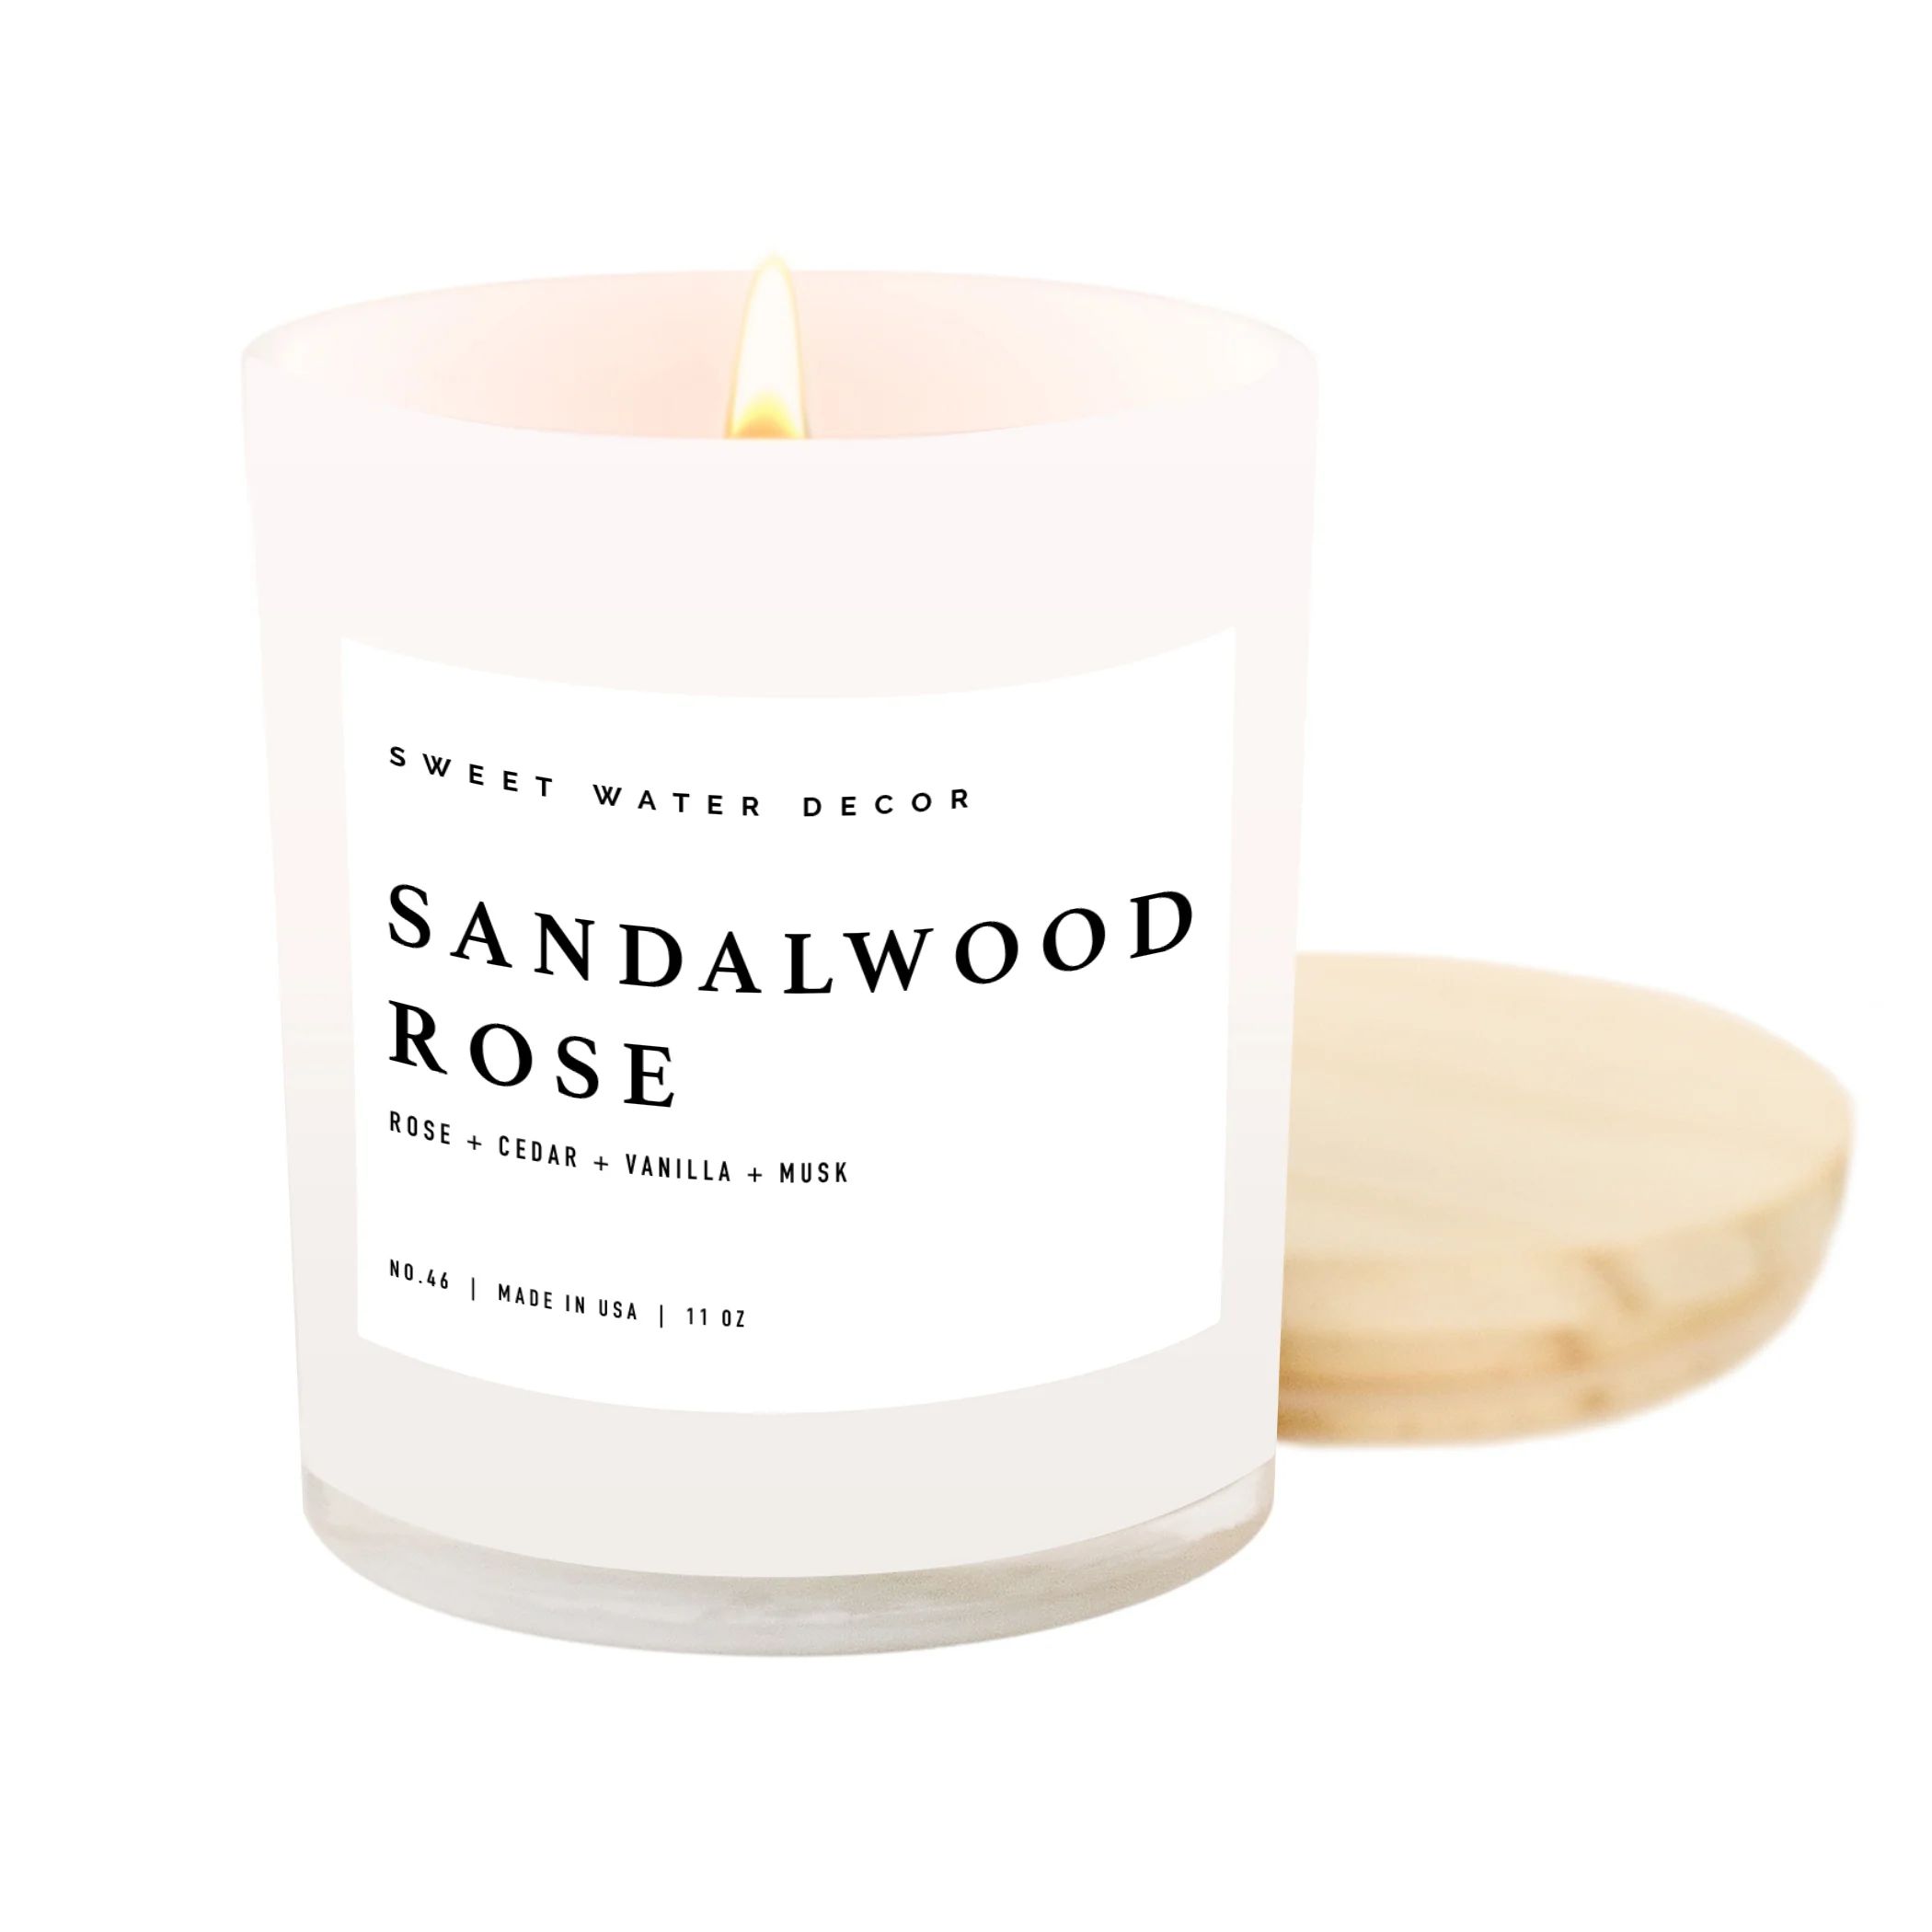 Sandalwood Rose Soy Candle - White Jar - 11 oz | Sweet Water Decor, LLC